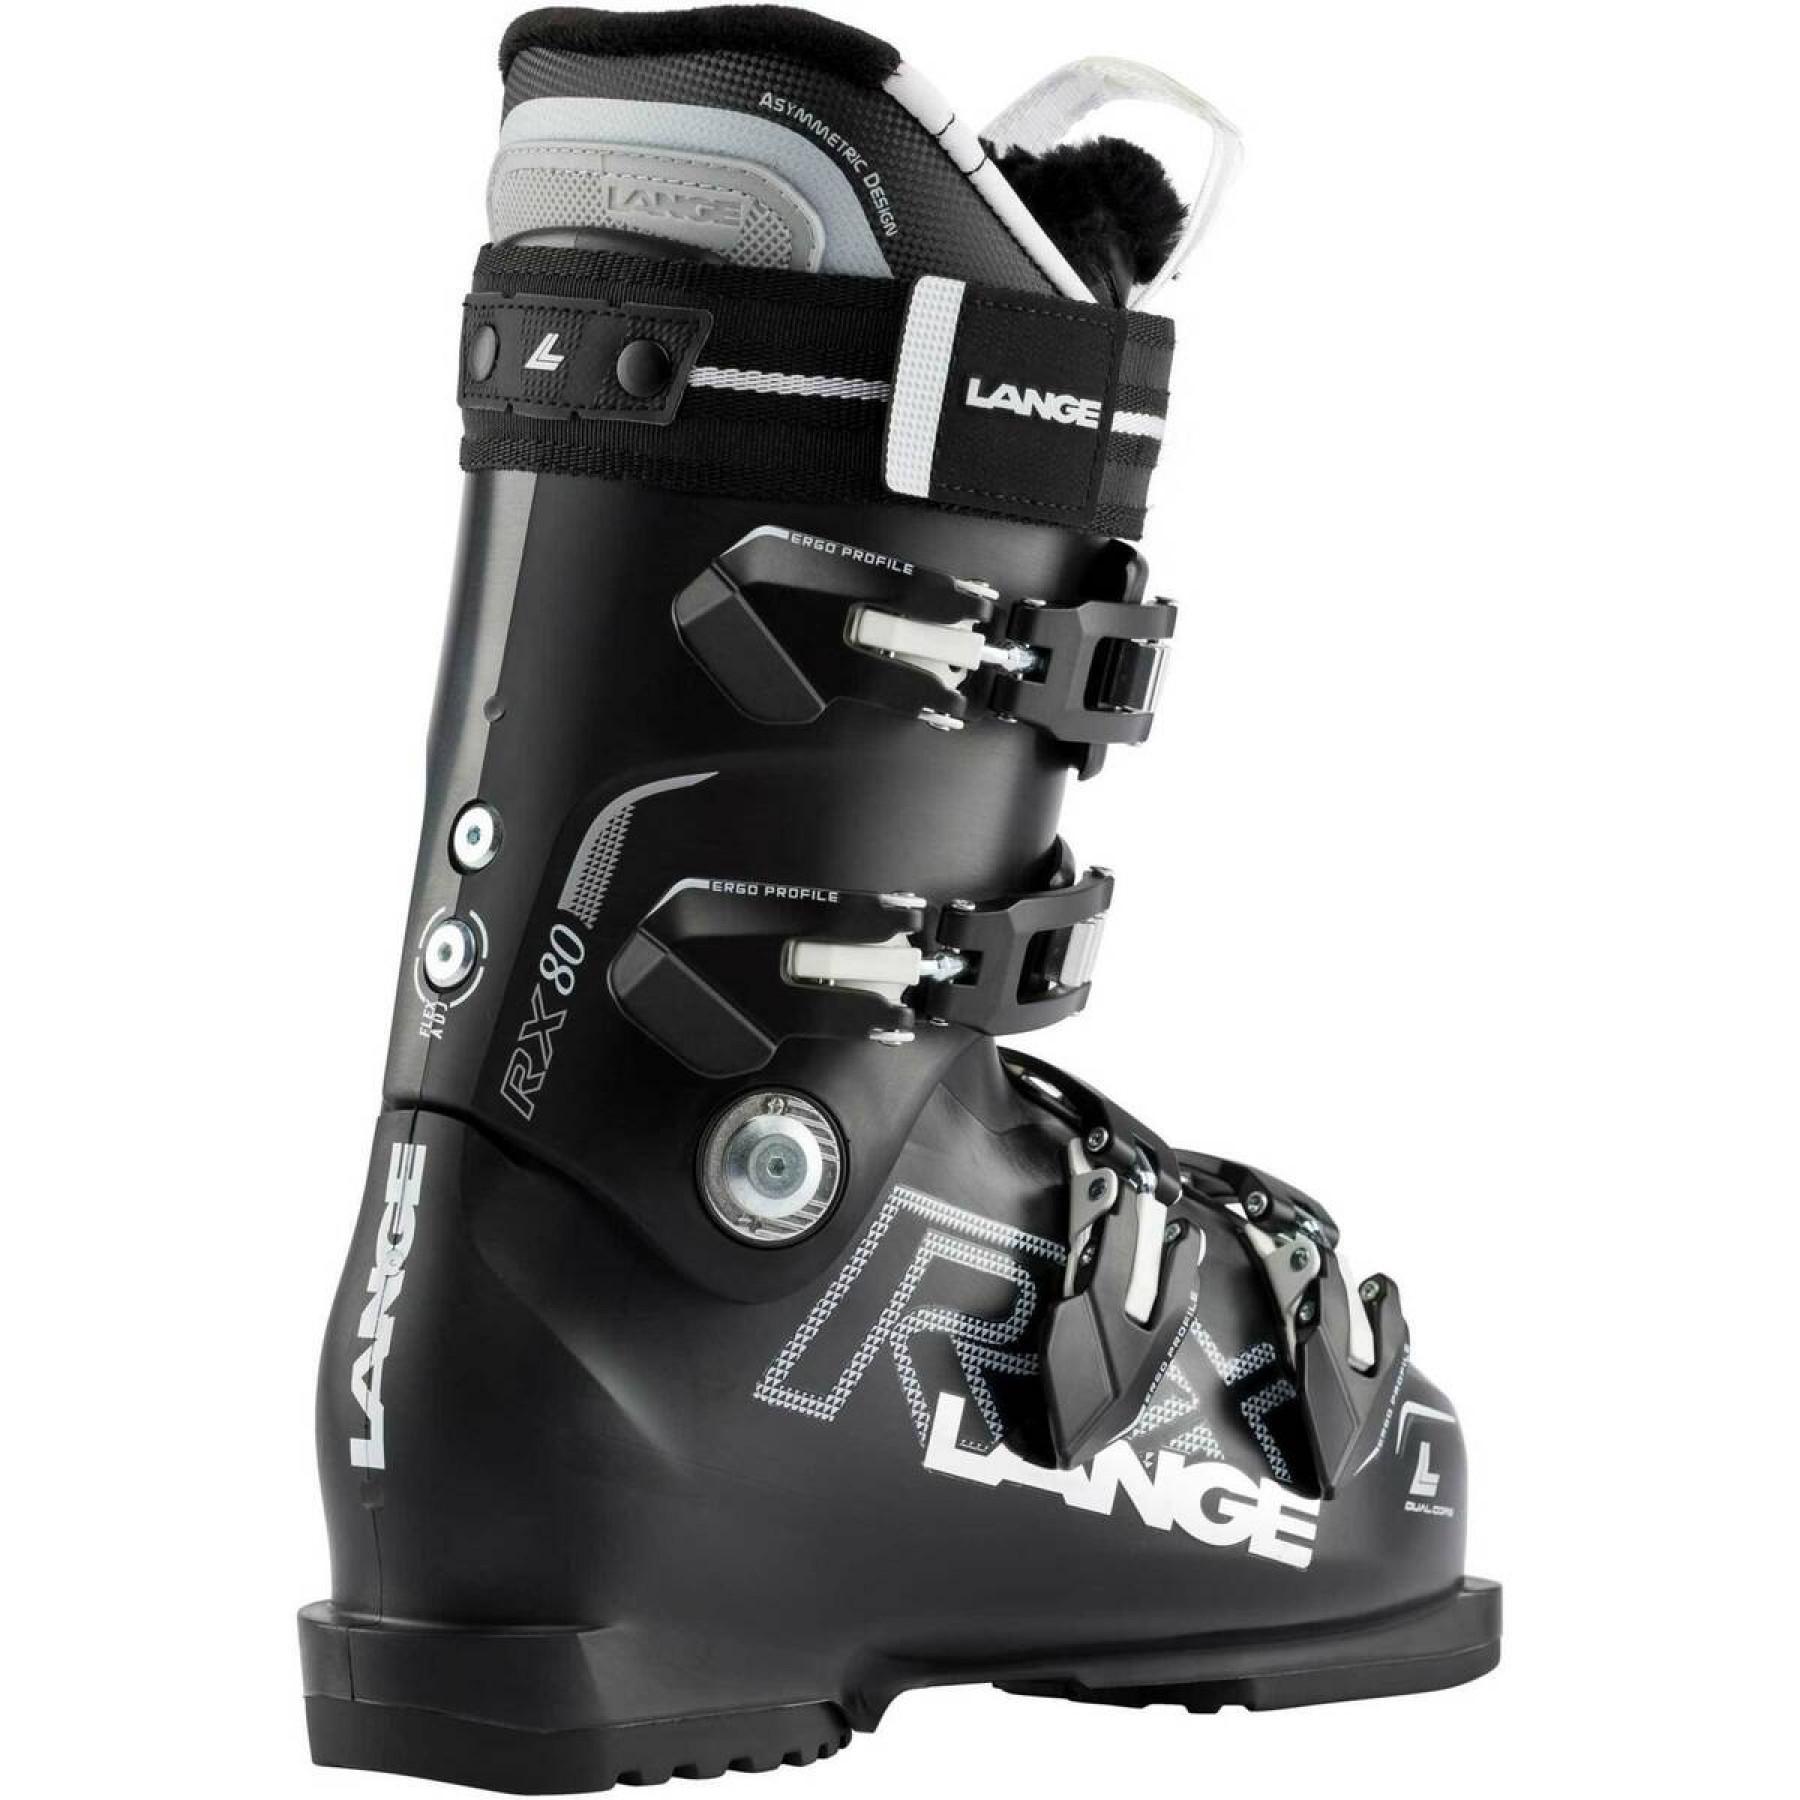 Damskie buty narciarskie Lange rx 80